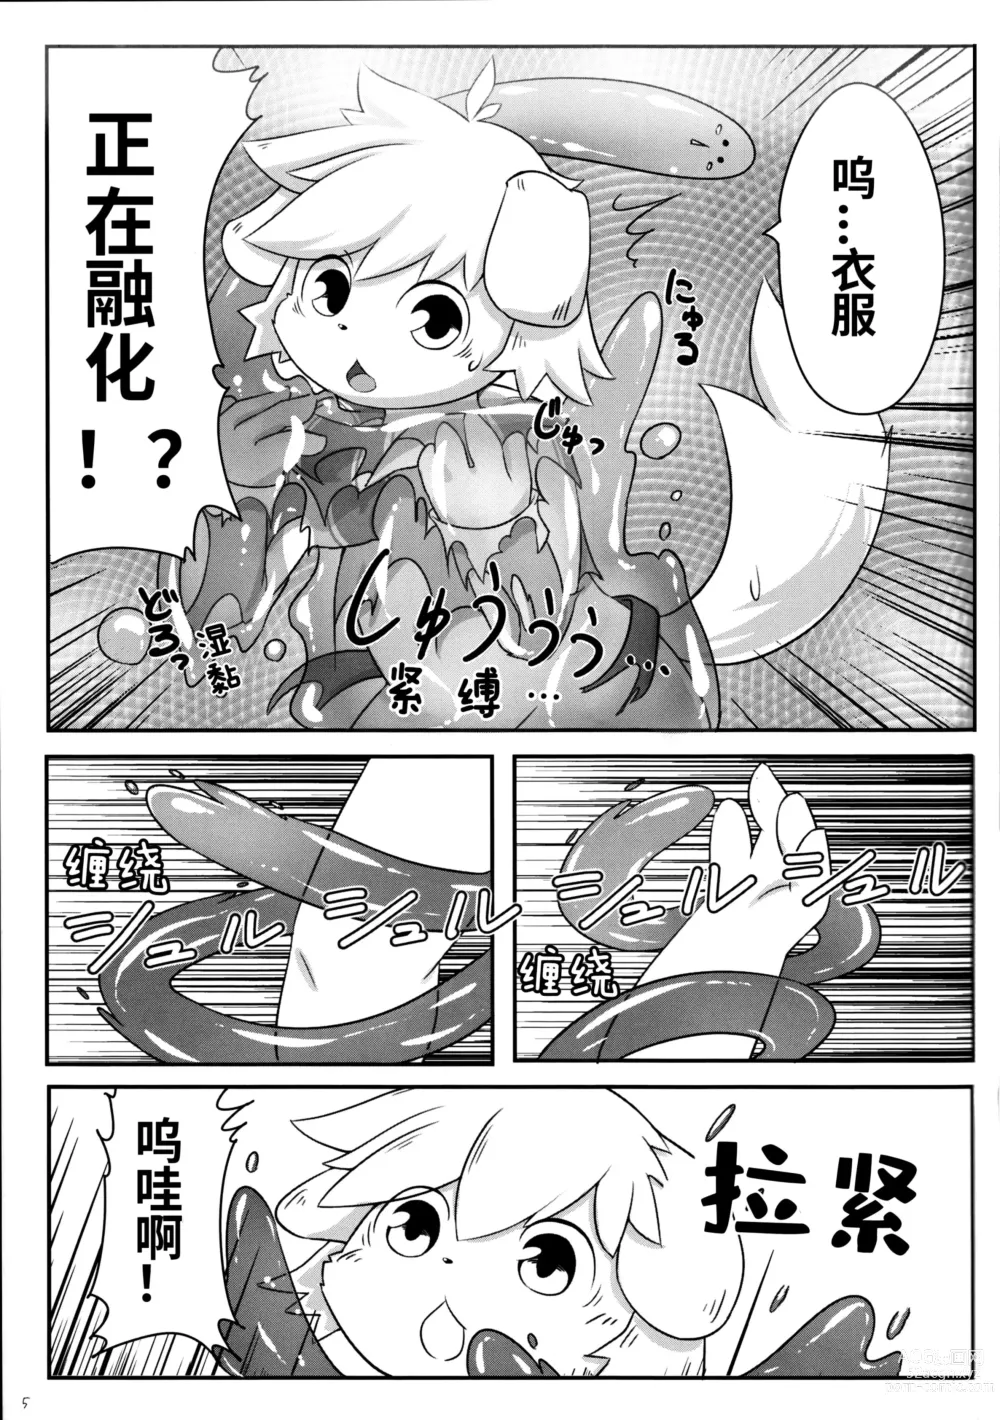 Page 6 of doujinshi SUMMON PANIC